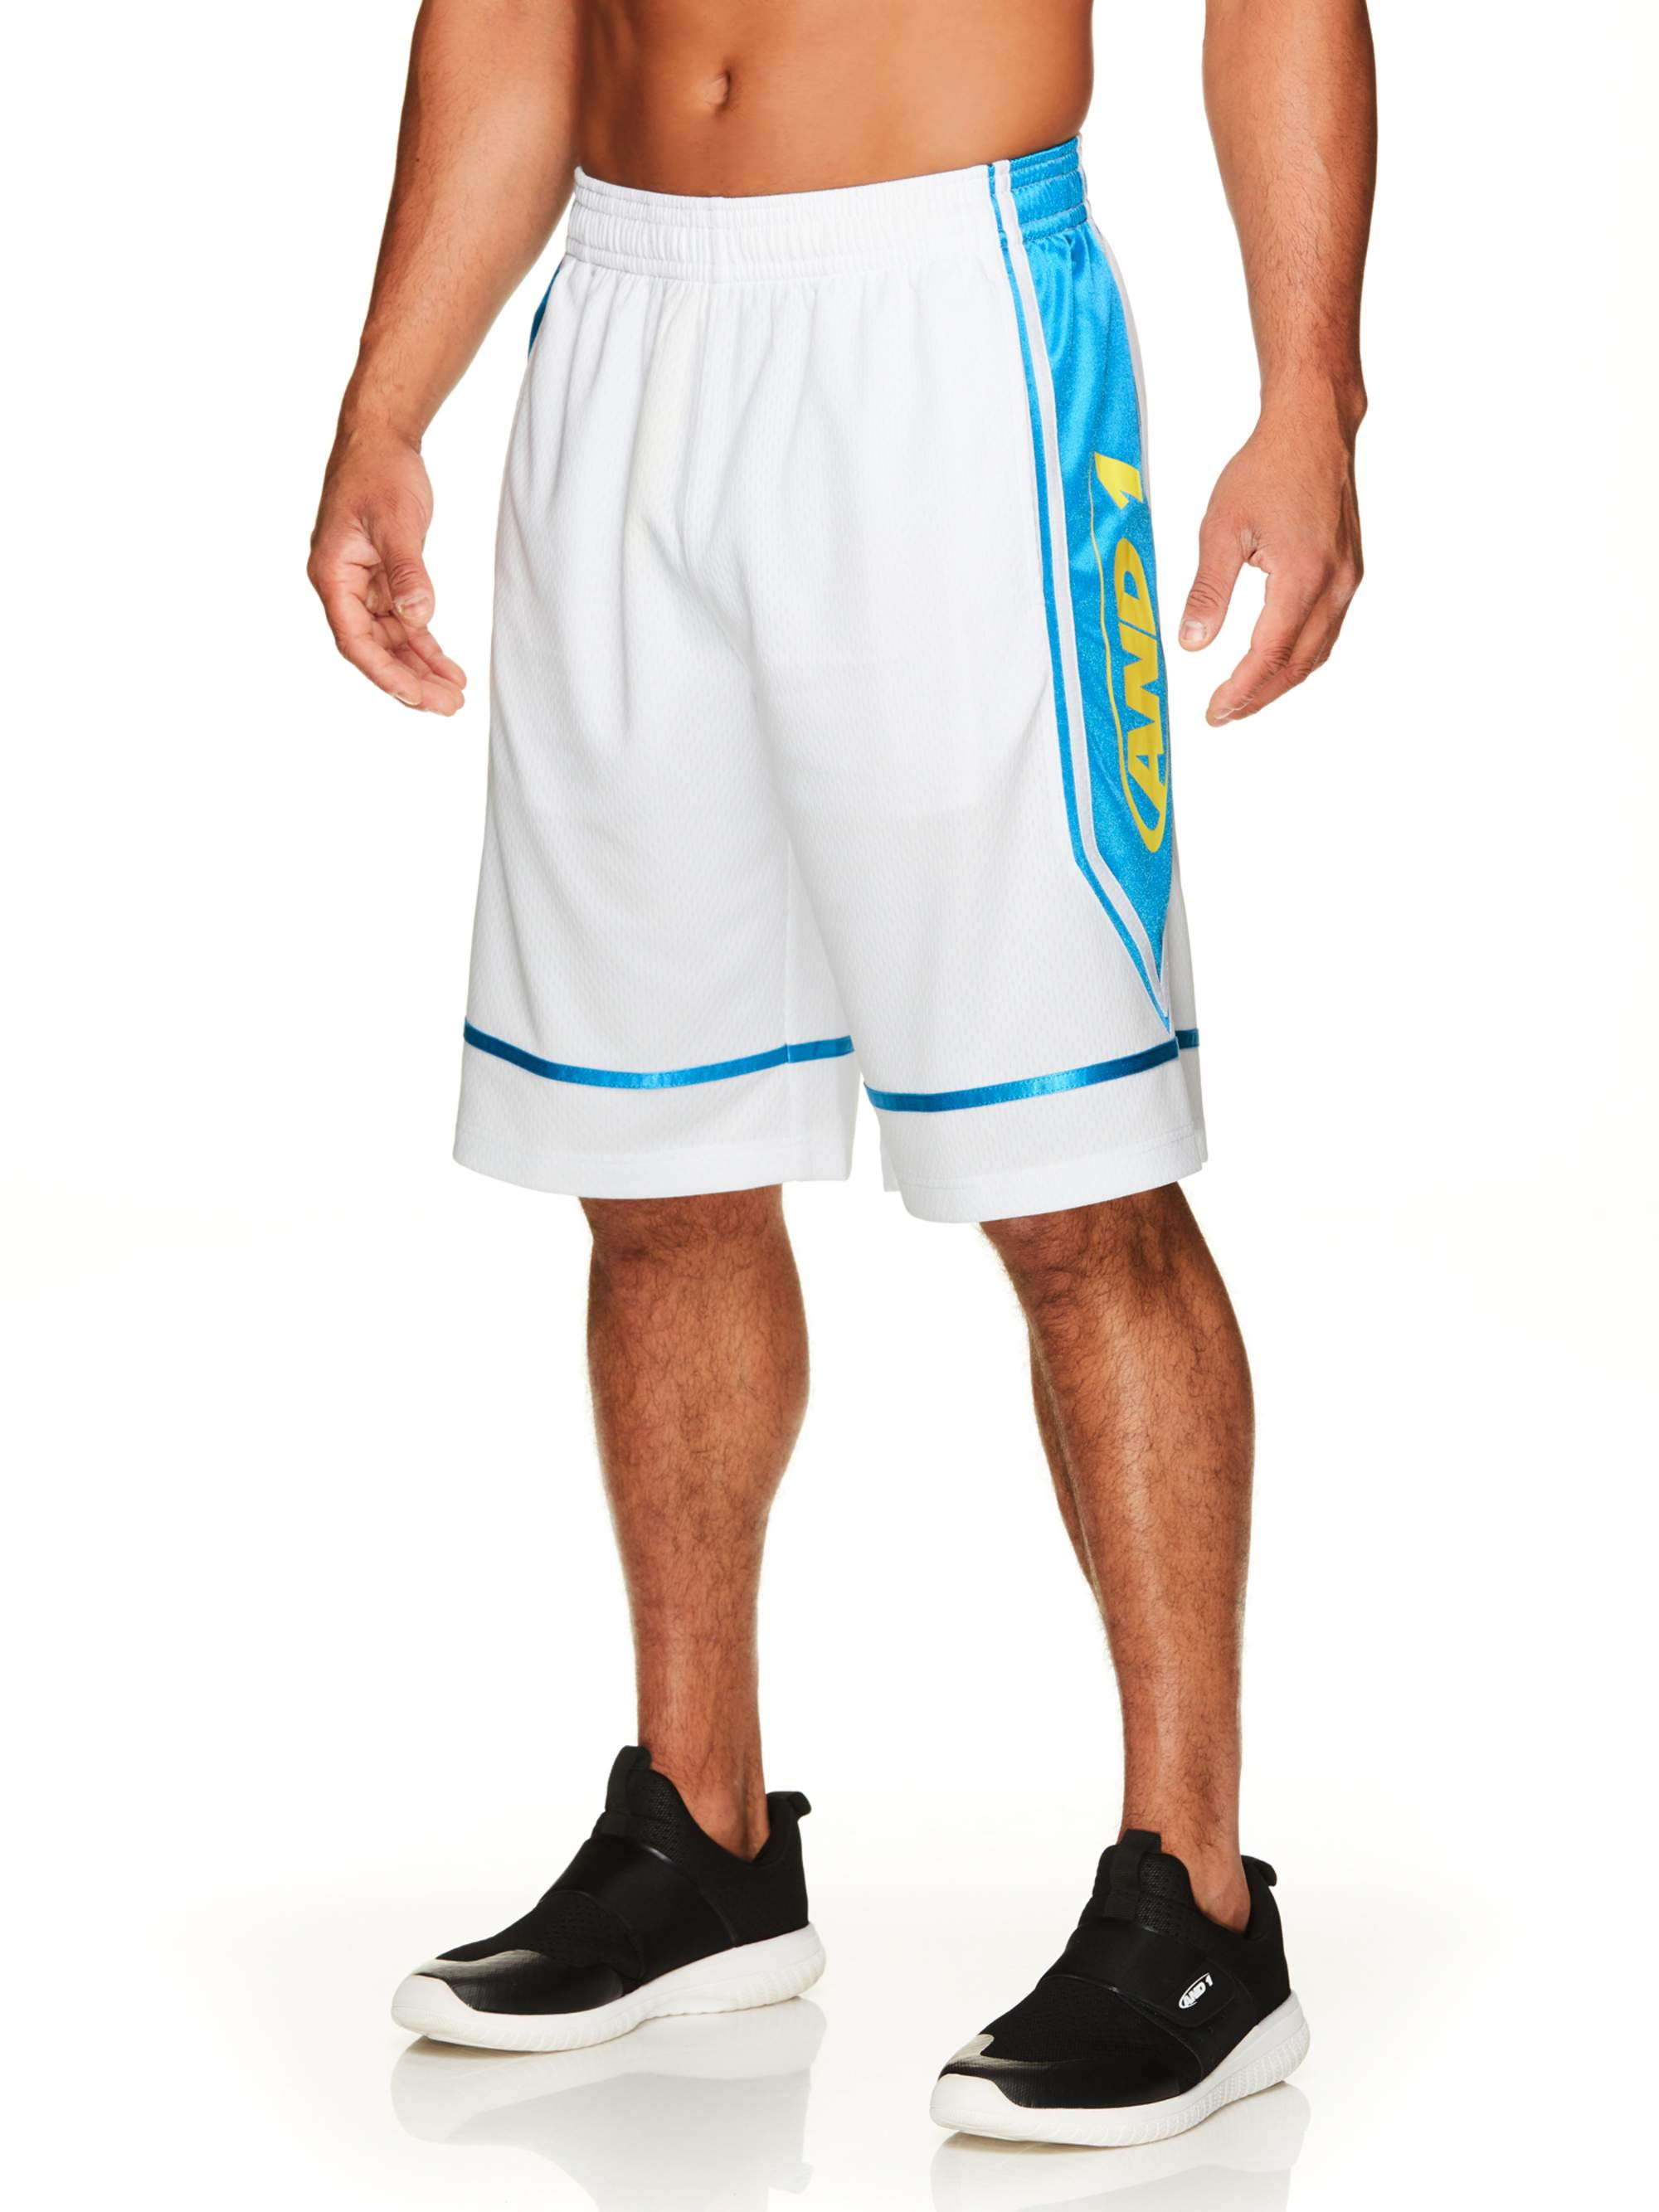 duke basketball shorts